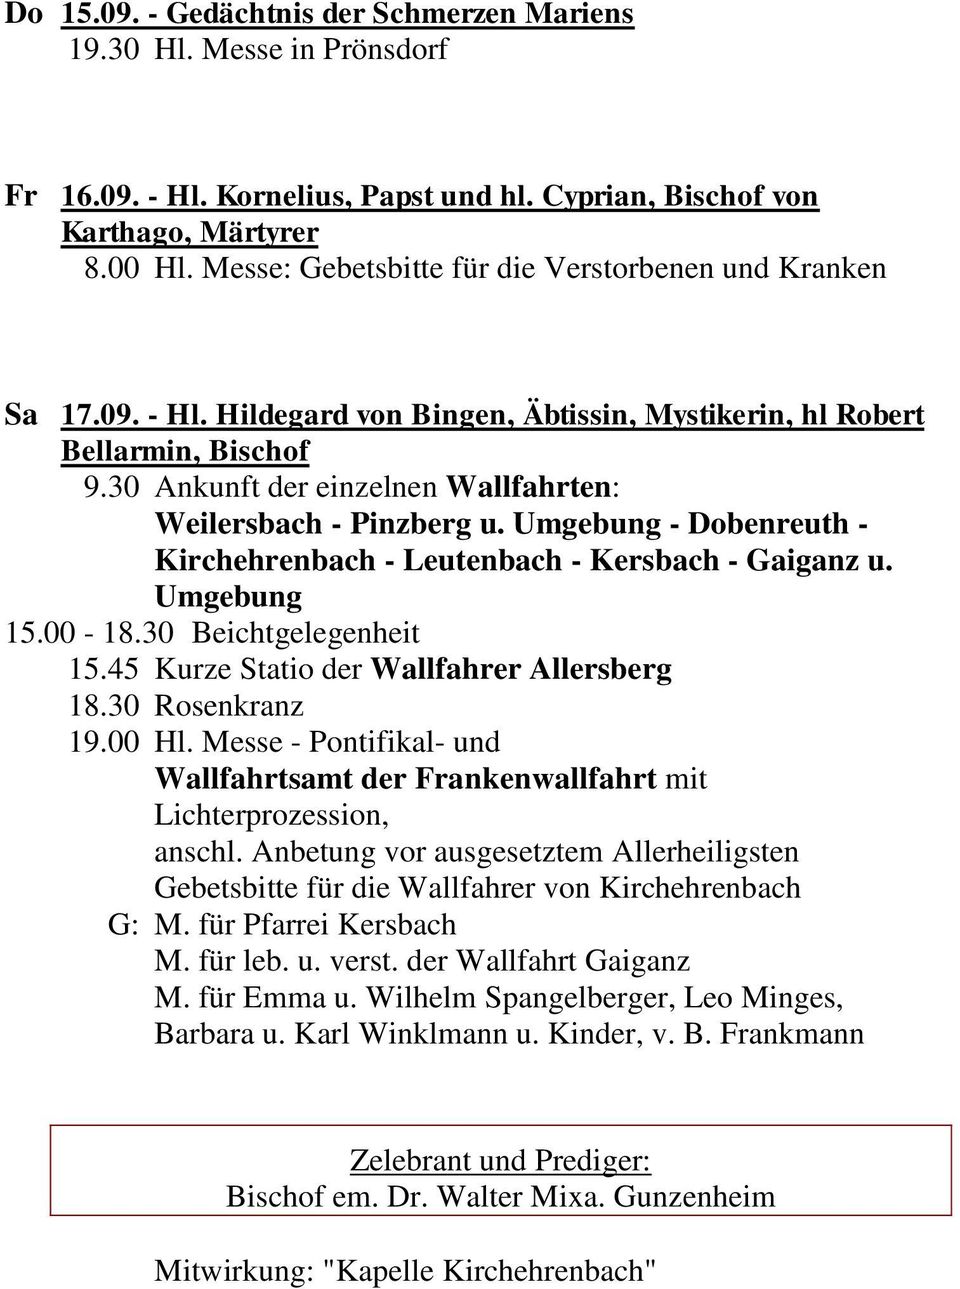 30 Ankunft der einzelnen Wallfahrten: Weilersbach - Pinzberg u. Umgebung - Dobenreuth - Kirchehrenbach - Leutenbach - Kersbach - Gaiganz u. Umgebung 15.00-18.30 Beichtgelegenheit 15.